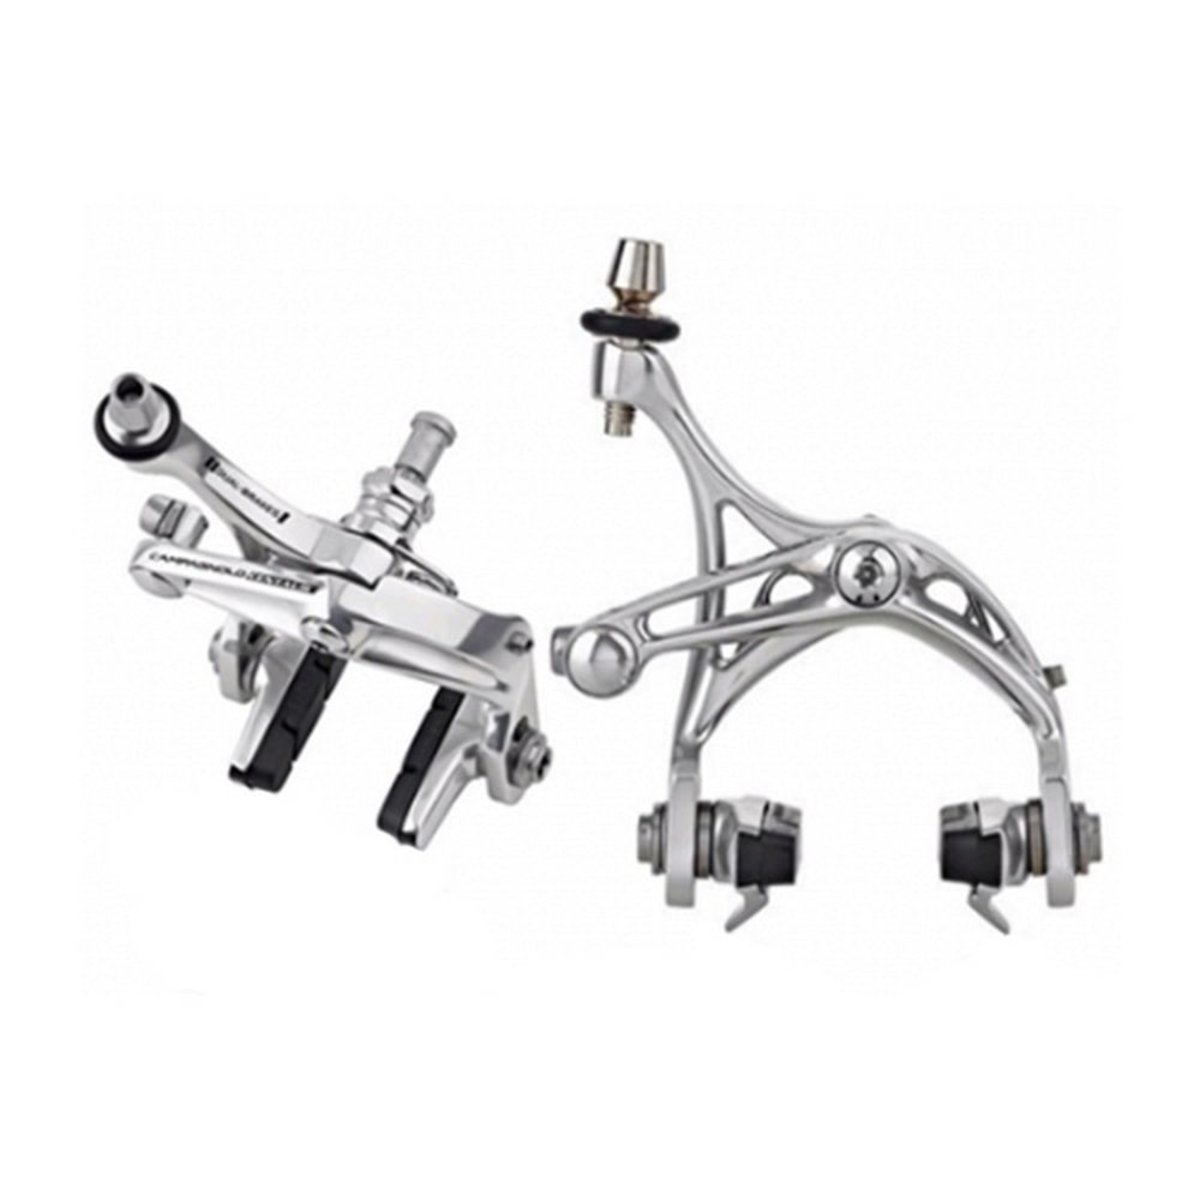 Тормоз ободной Campagnolo Centaur-D Skeleton Front/Rear Silver, V-brake, передний + задний